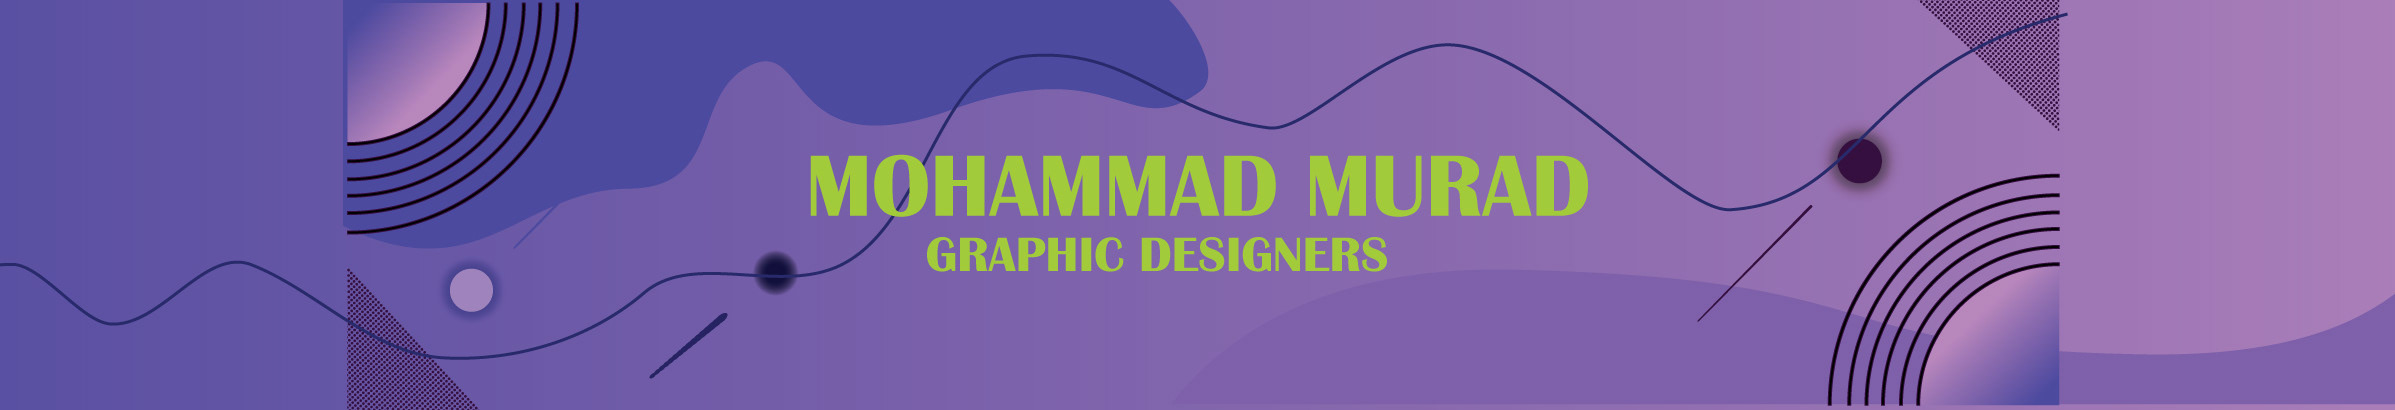 Banner de perfil de Mohammad Murad